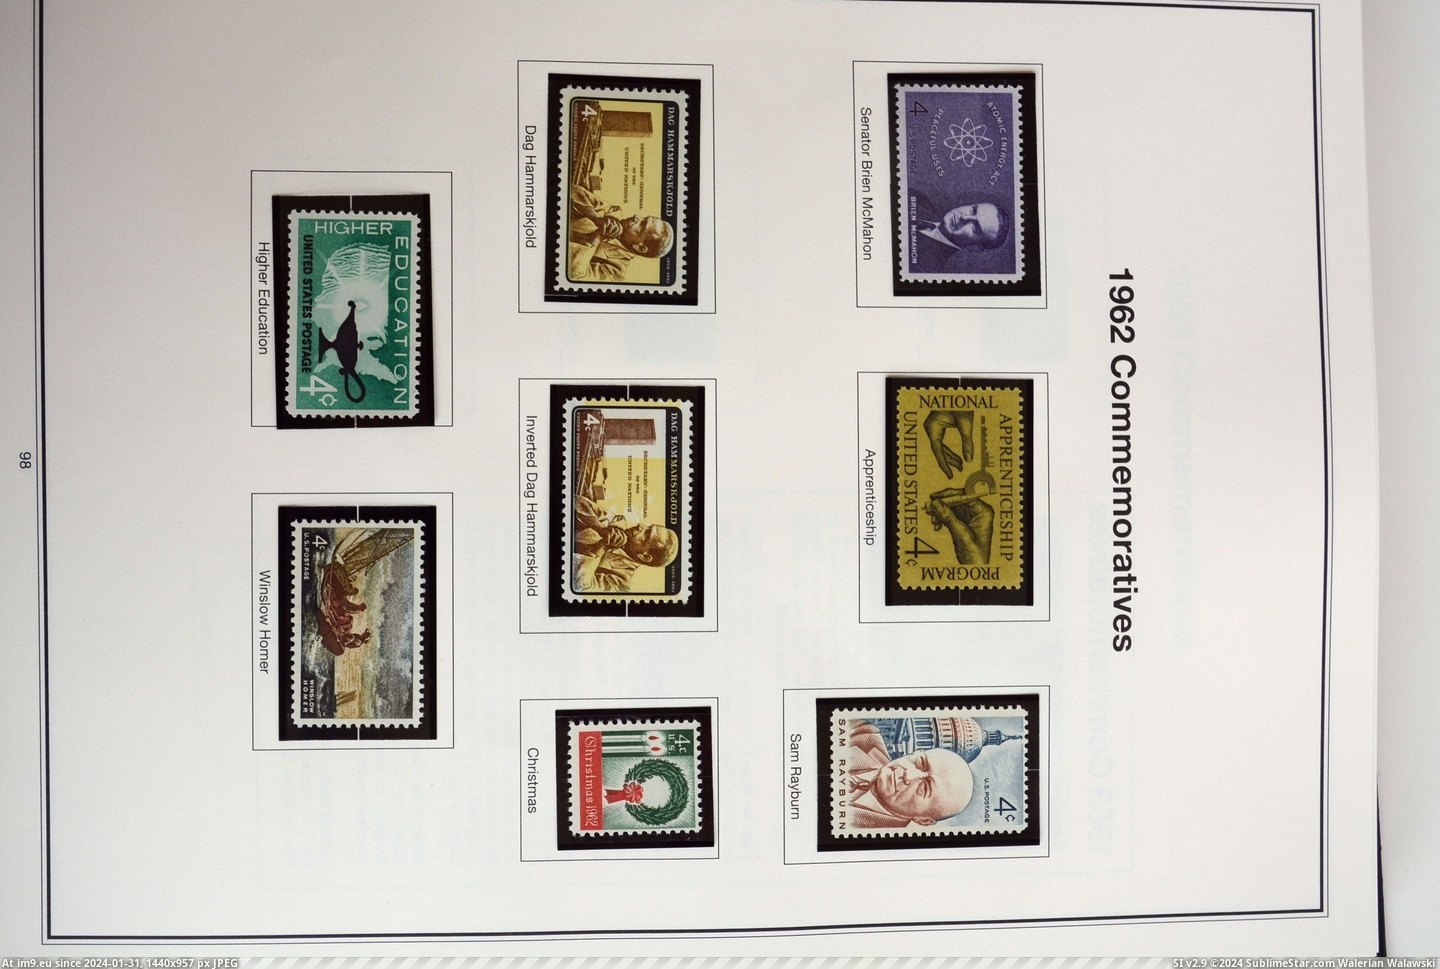  #Dsc  DSC_0852 Pic. (Image of album Stamp Covers))